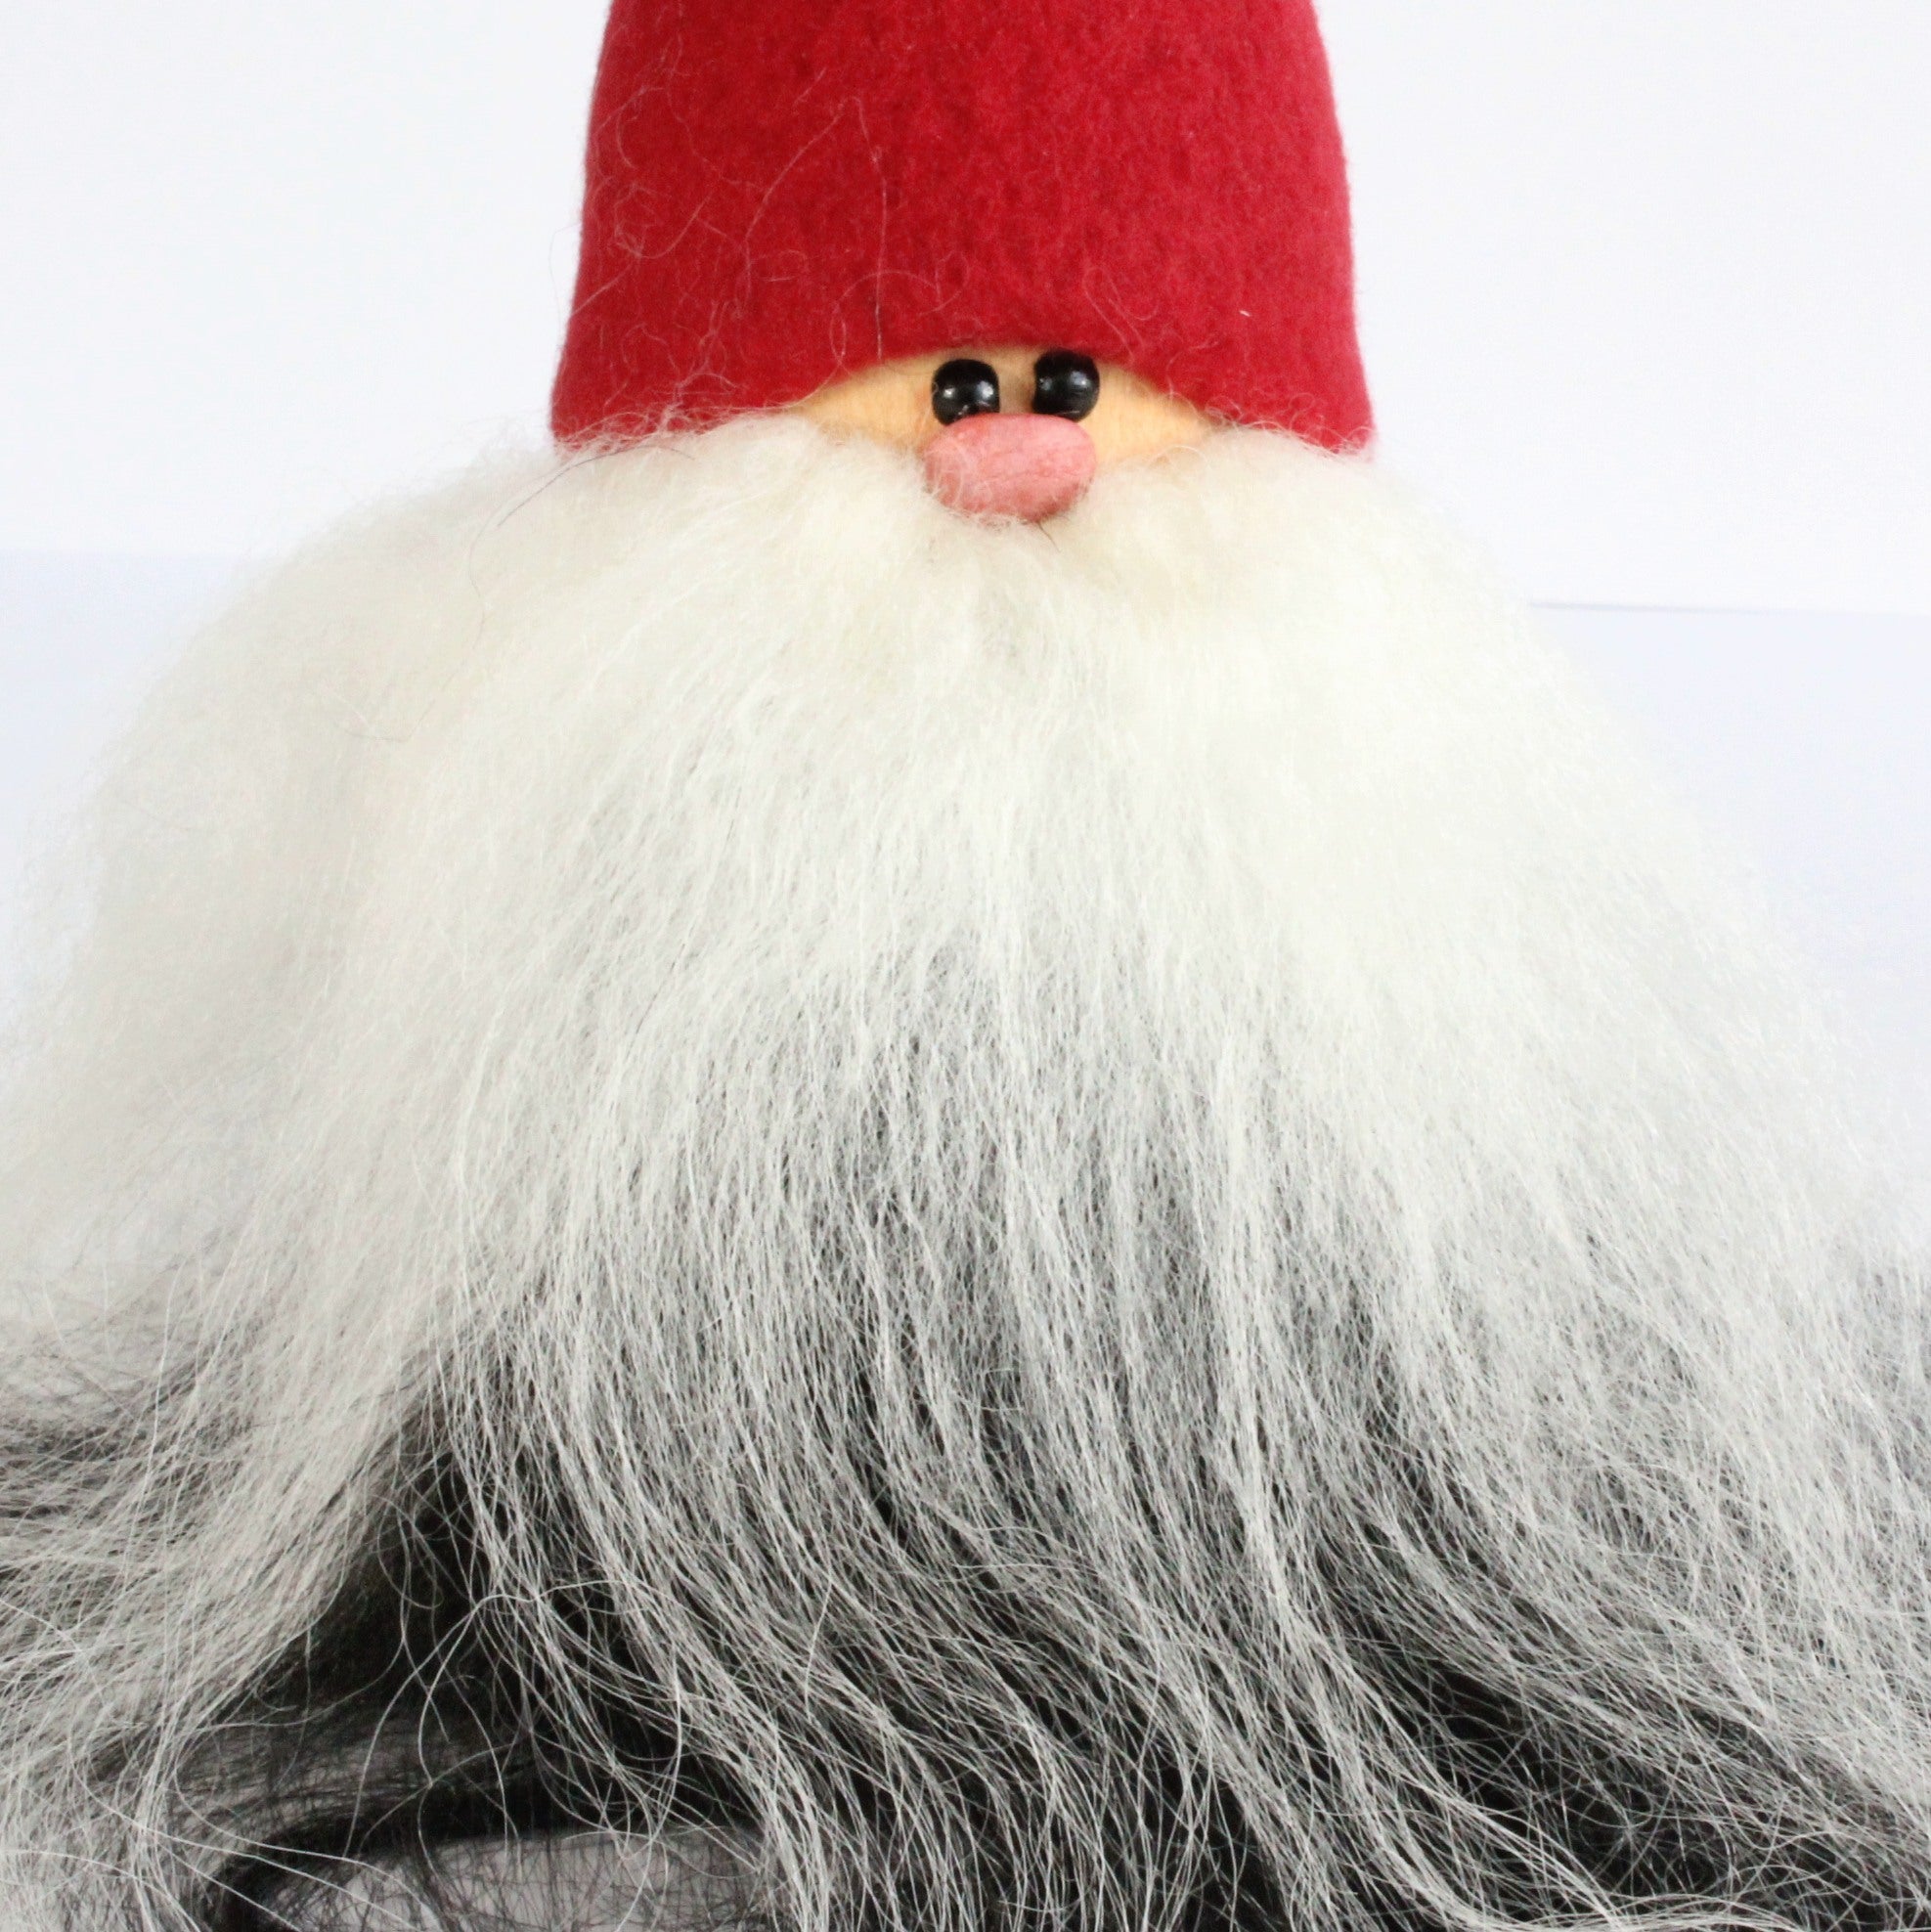 Handmade Santa, red cap, black and white beard, sheepskin